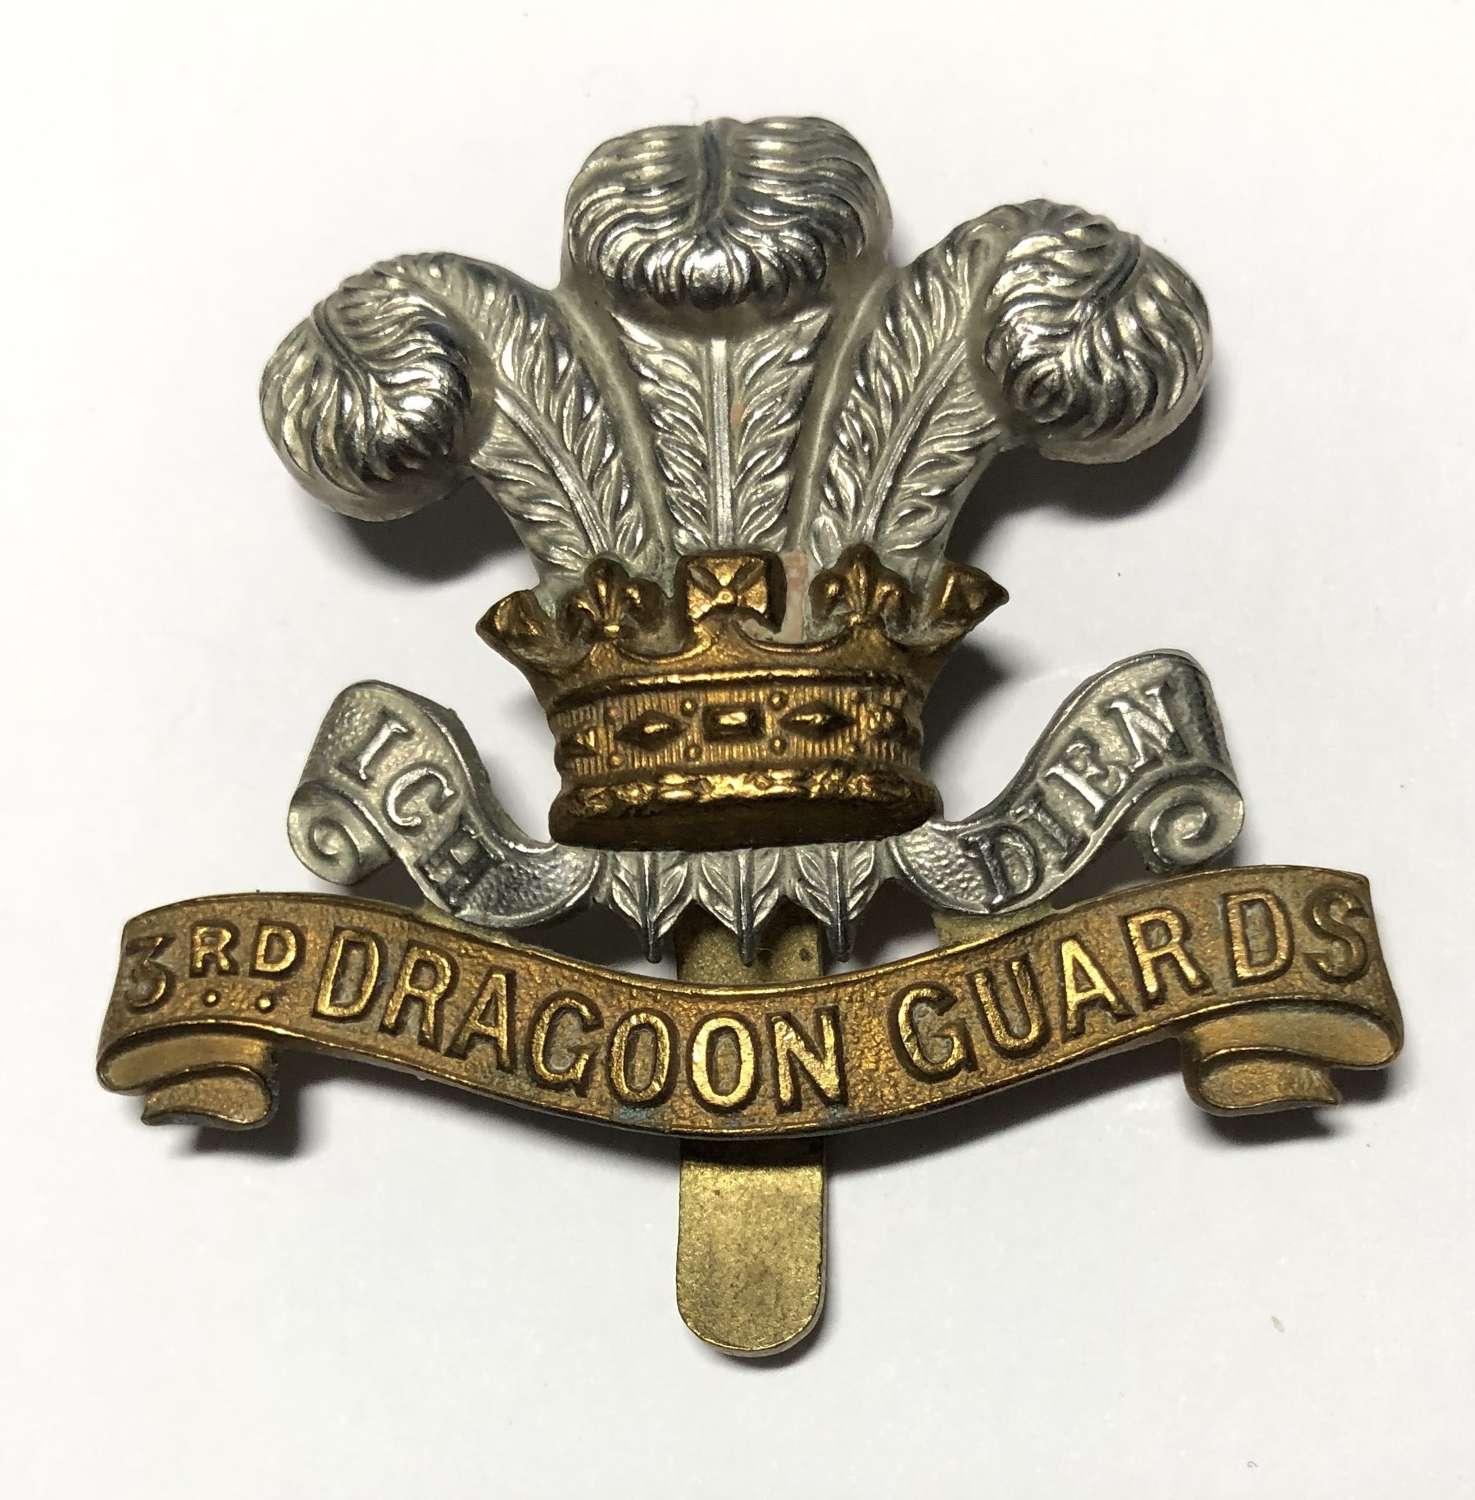 3rd Dragoon Guards cap badge c1896-1922